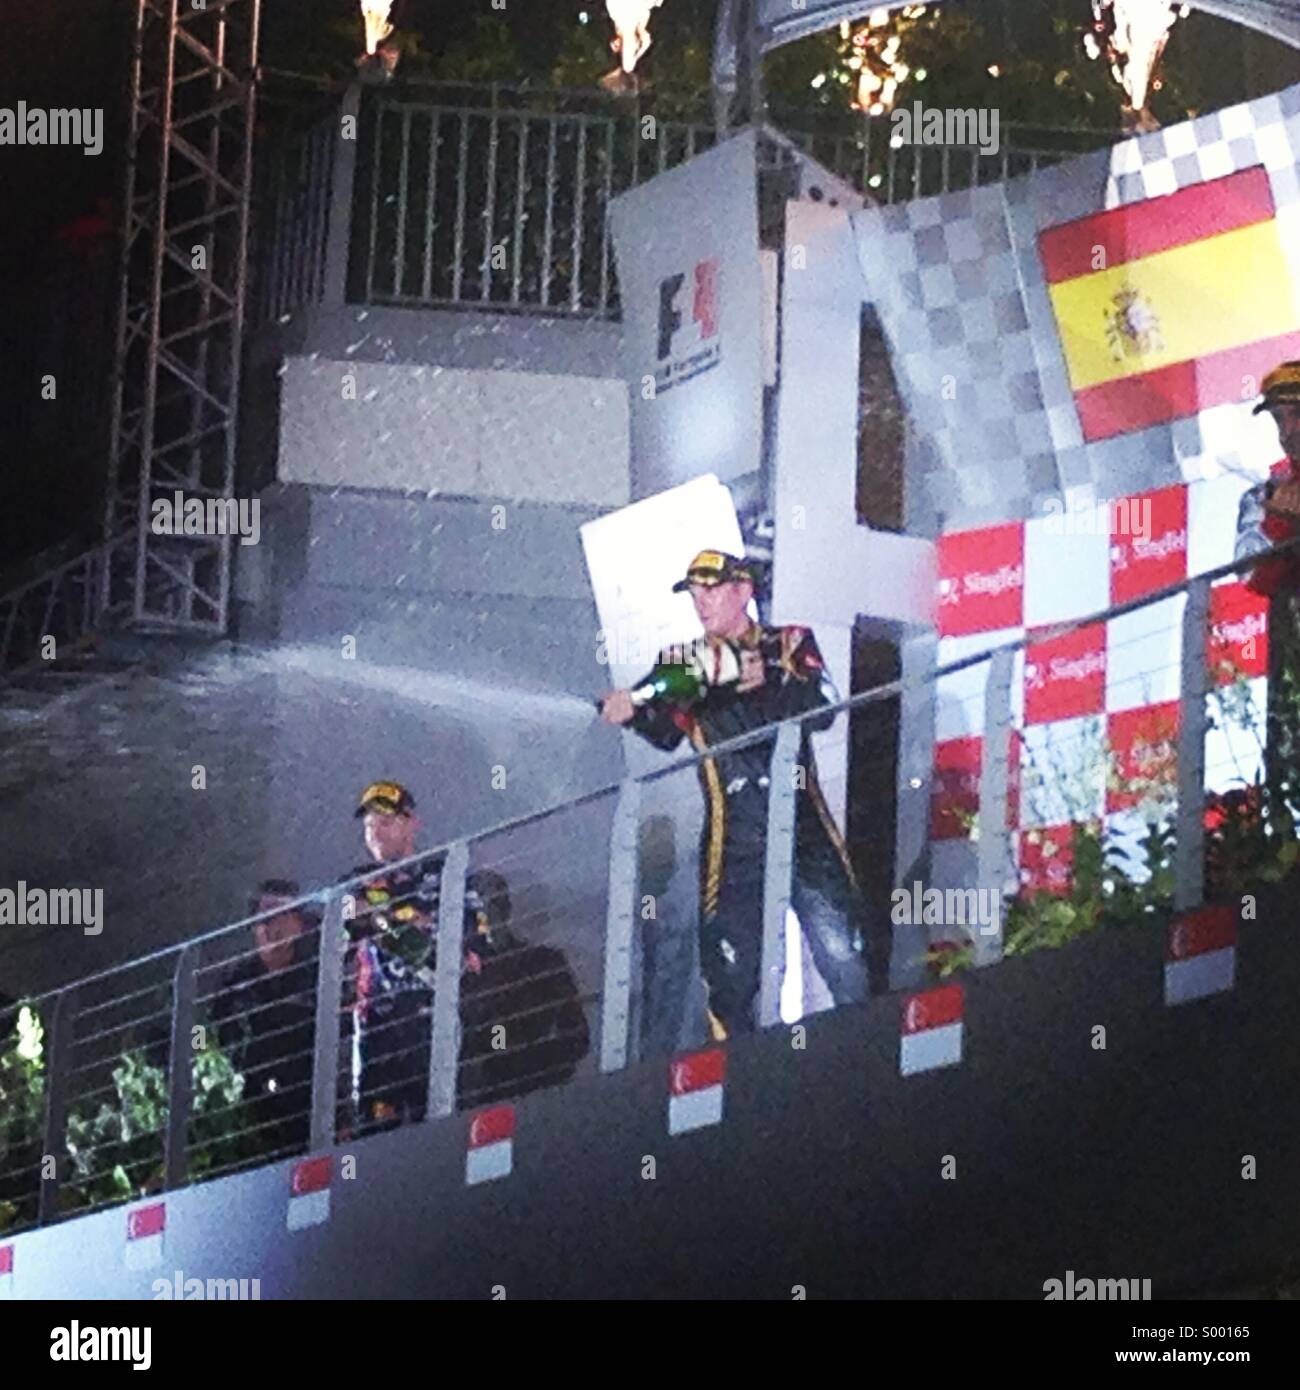 Winners podium at the Singapore GP, 2013 Stock Photo